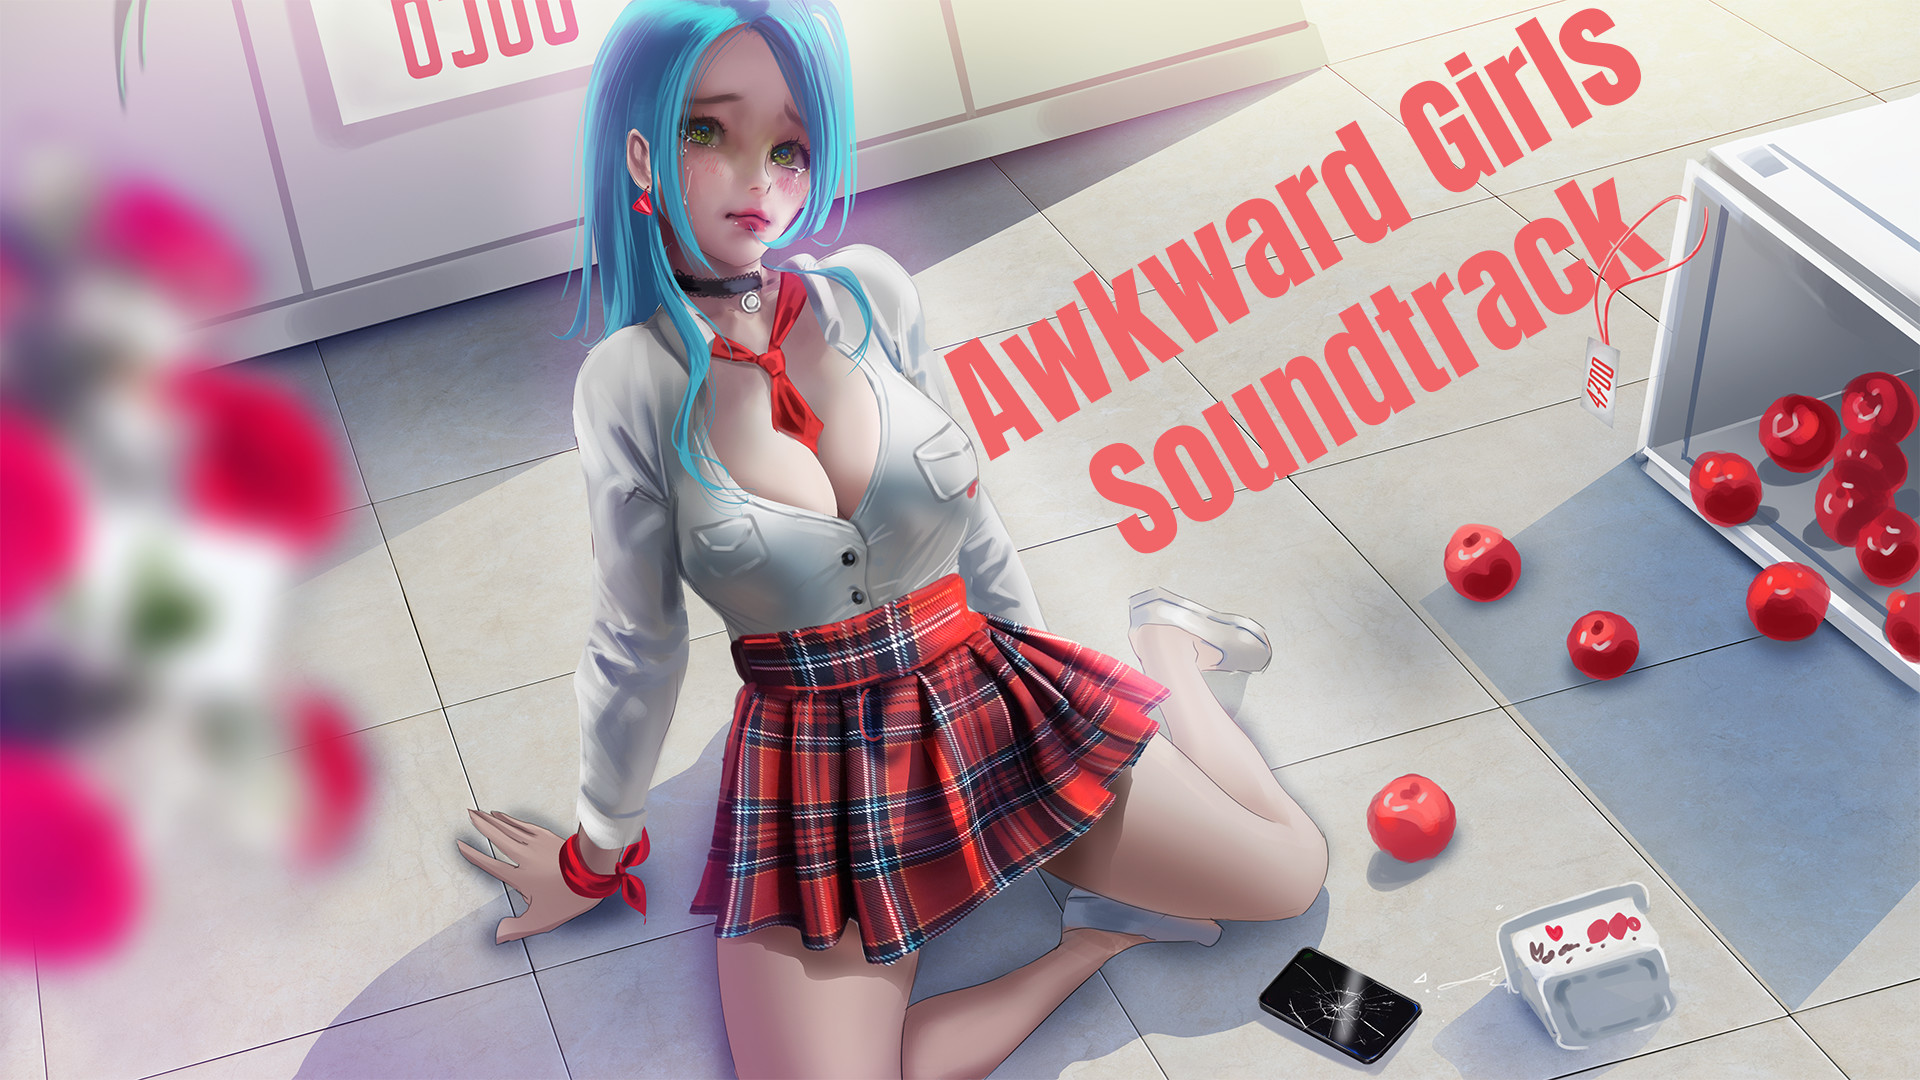 Awkward Girls Soundtrack screenshot